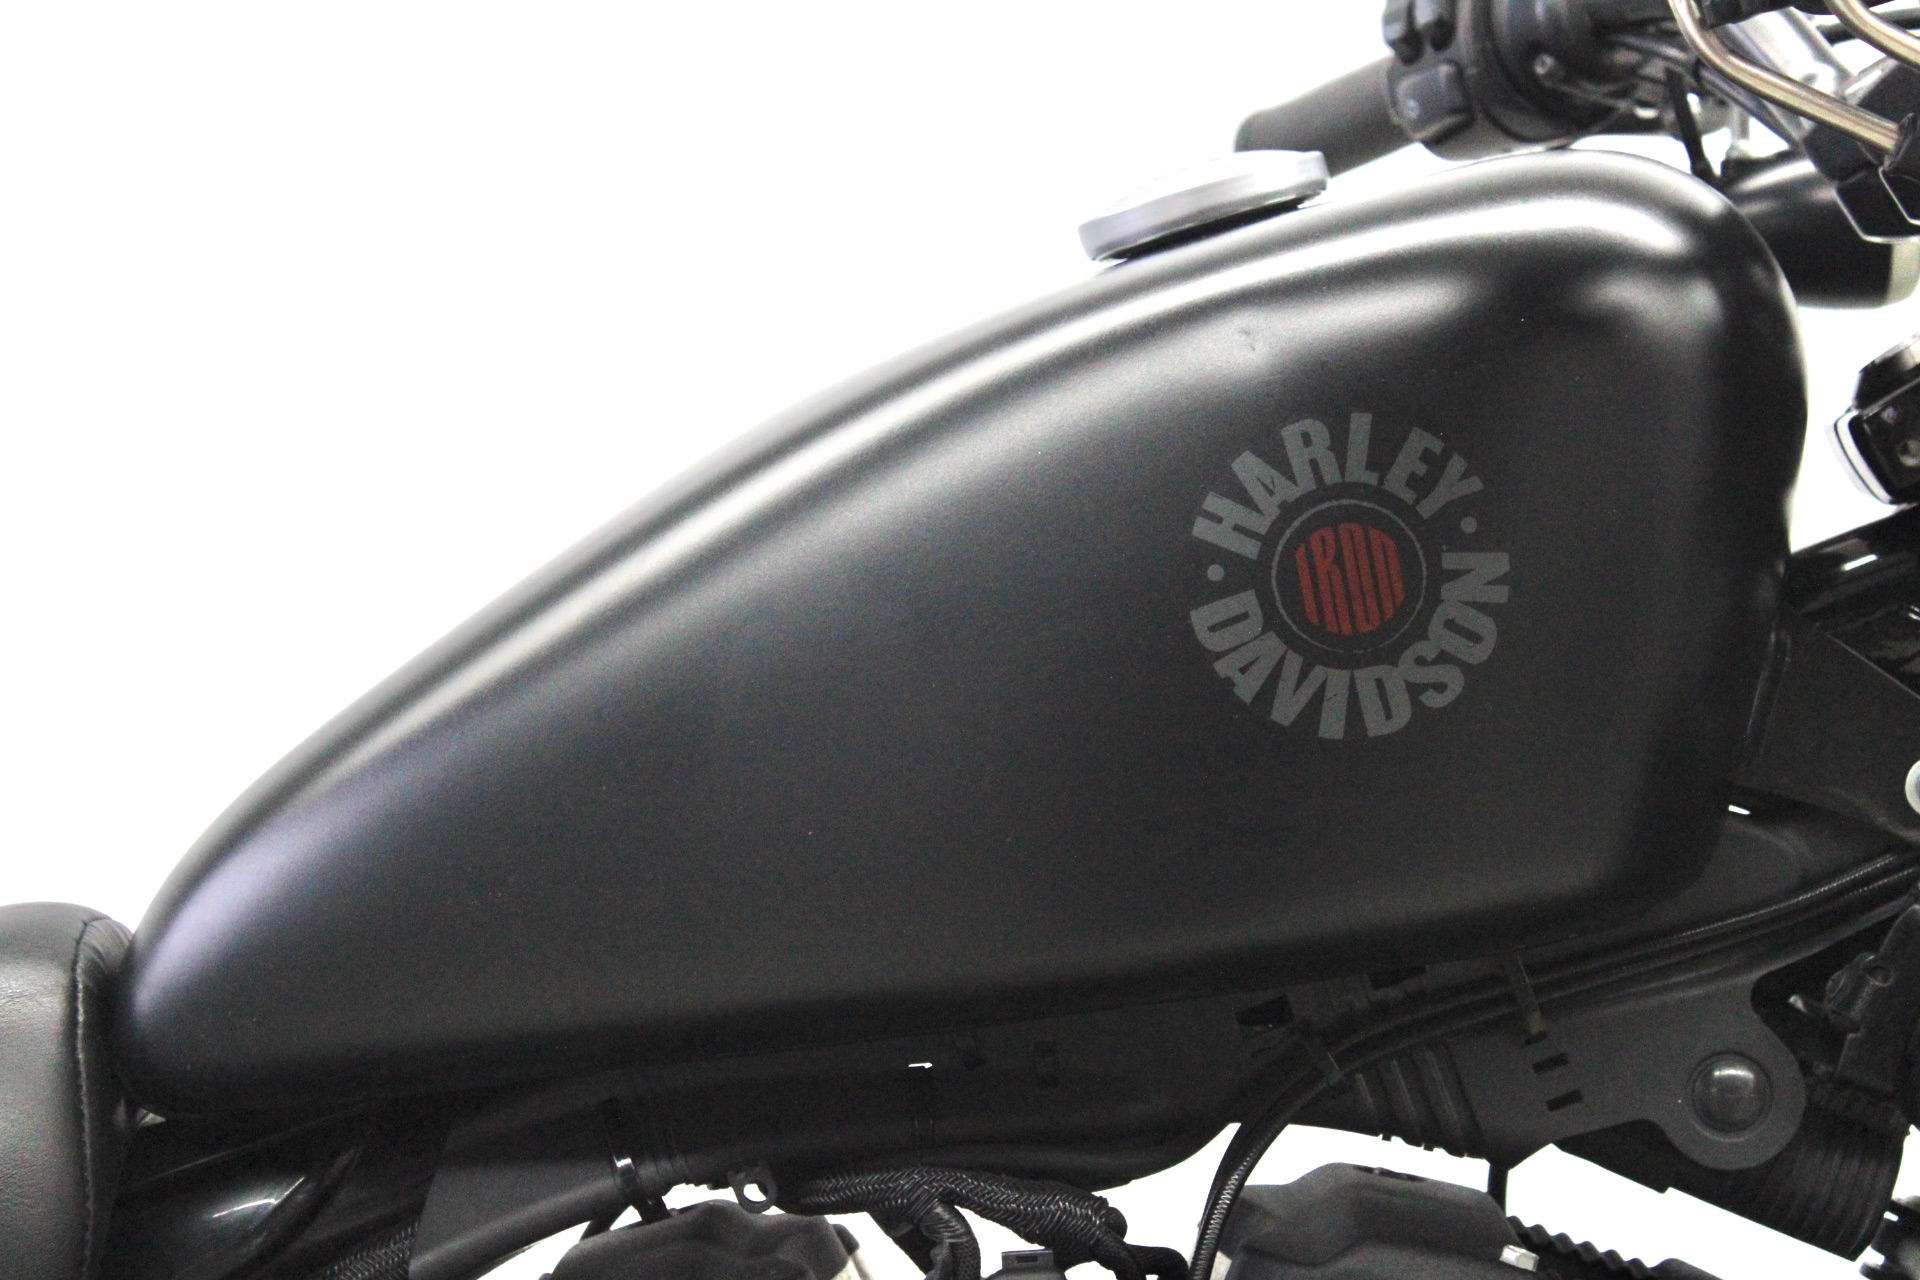 2021 Harley-Davidson Iron 883™ in Fredericksburg, Virginia - Photo 13